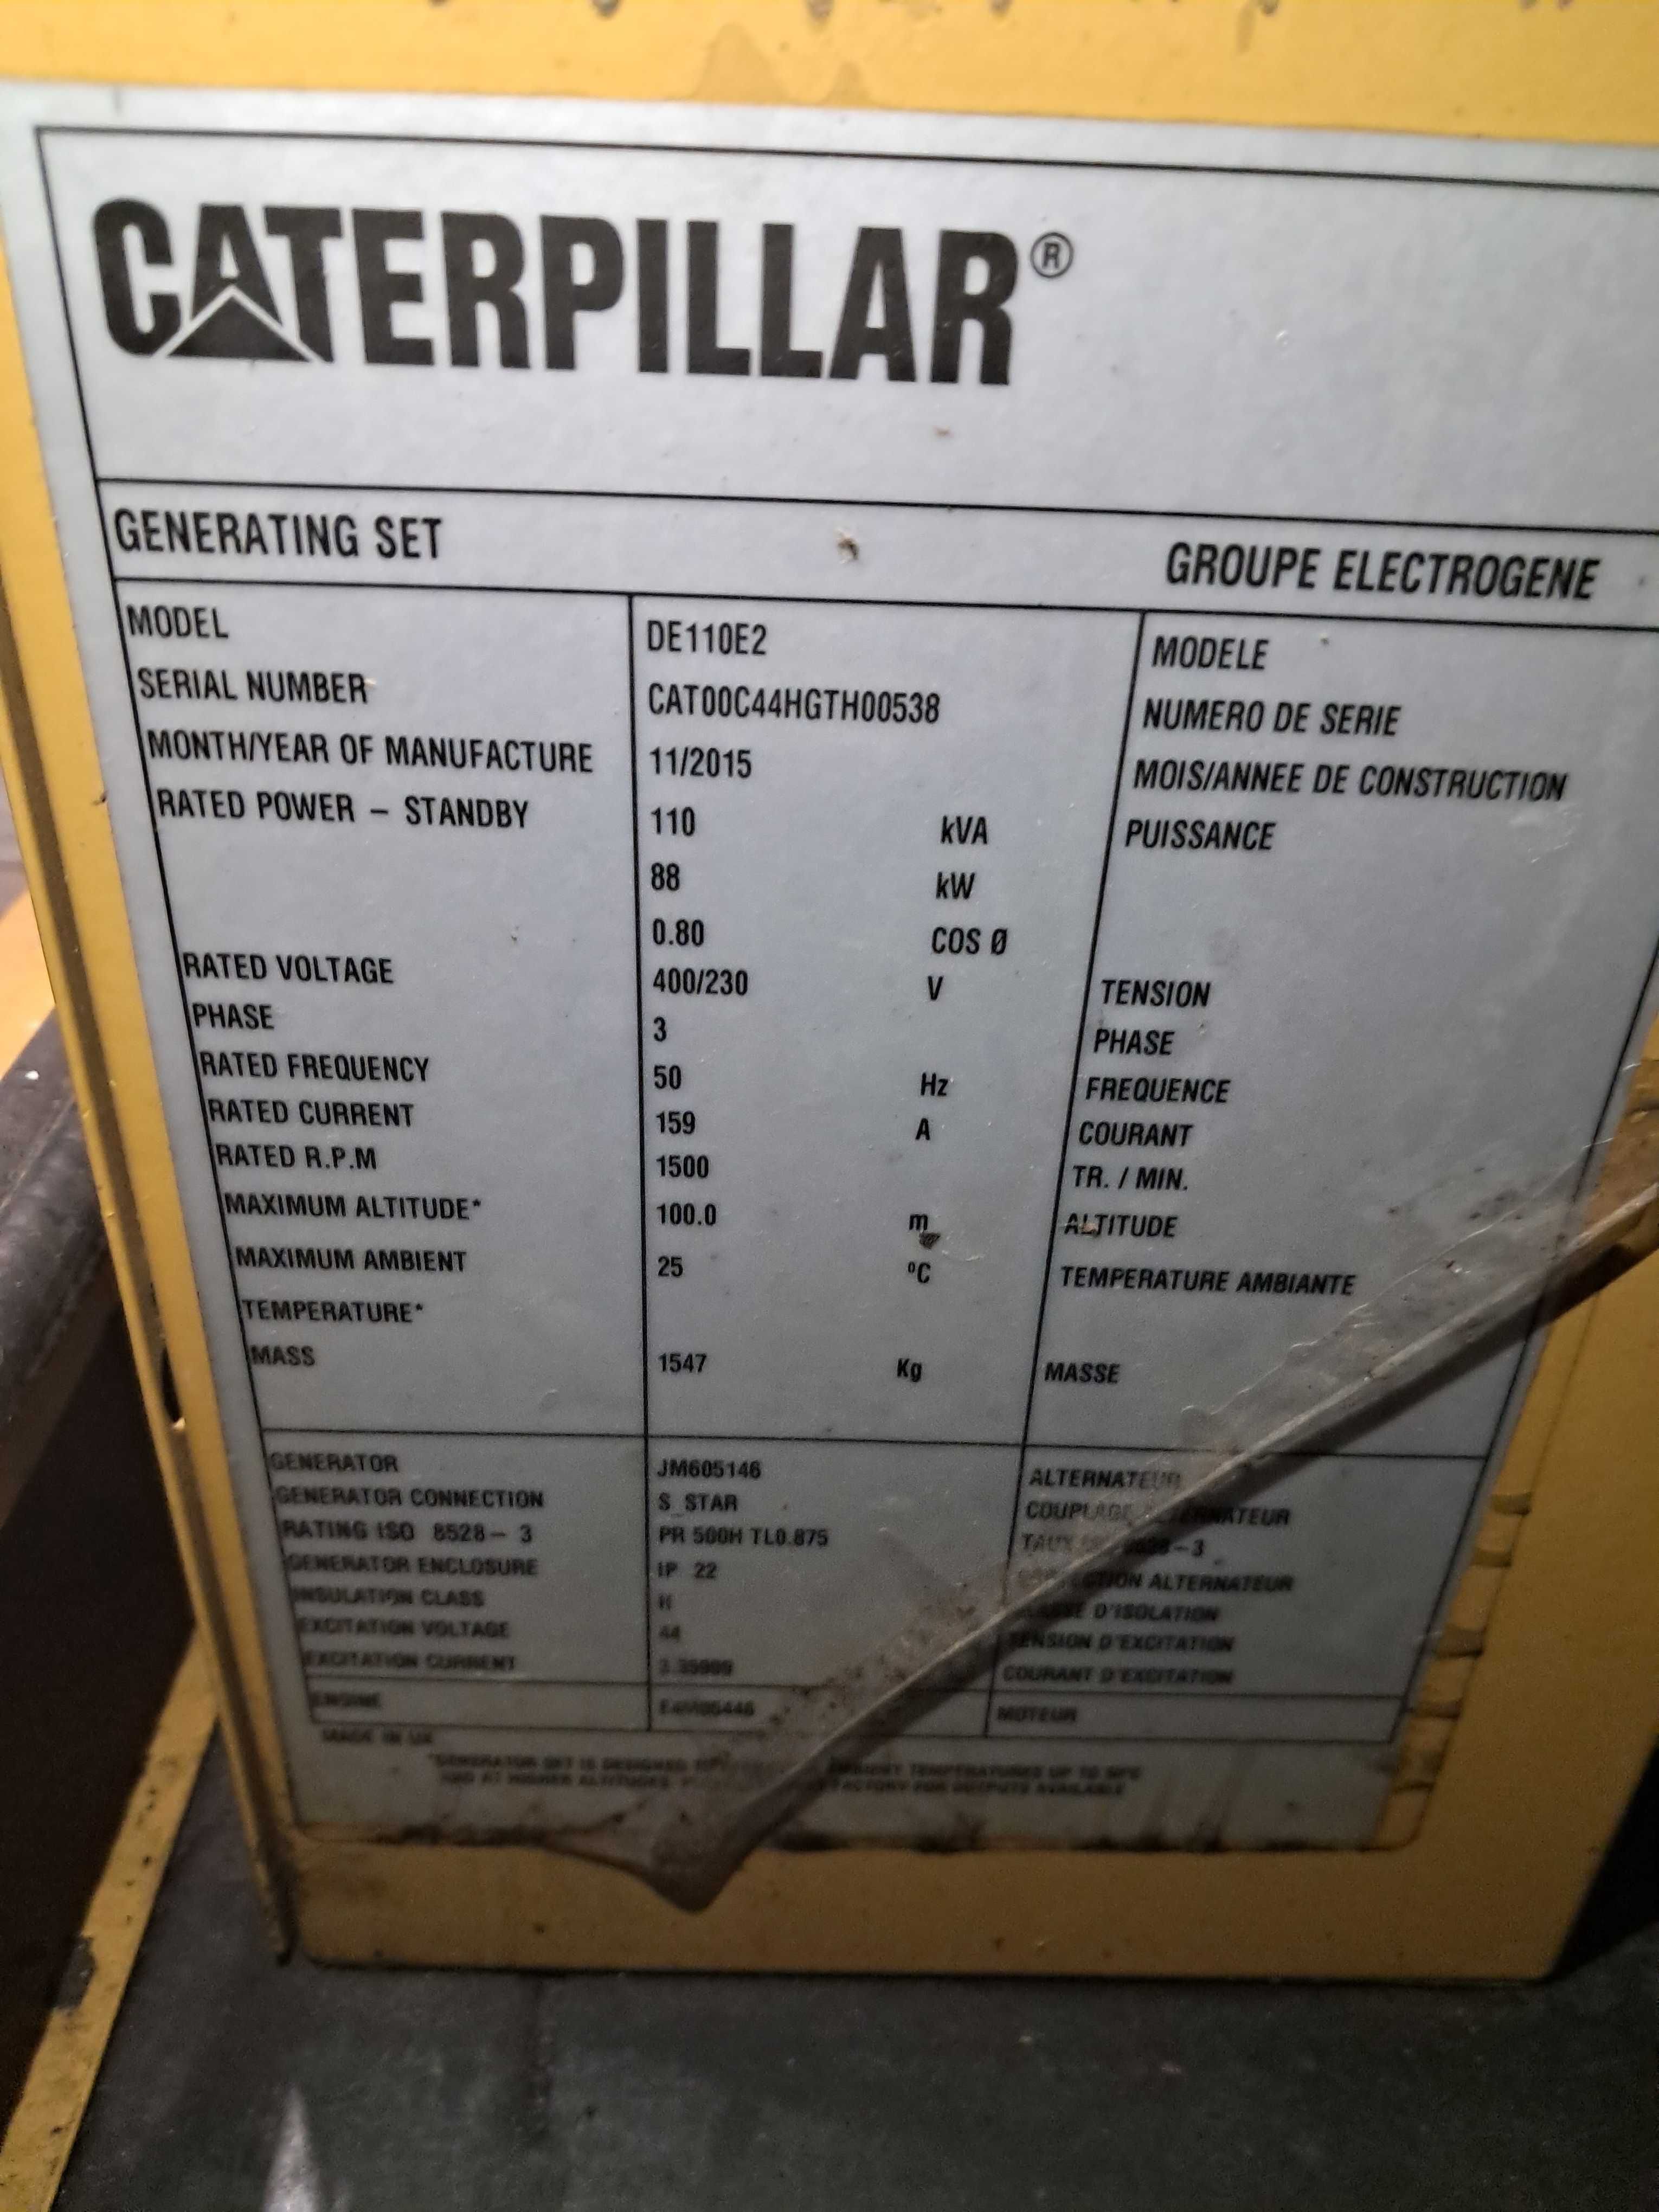 agregat prądotwórczy Caterpillar DE110E2 2015